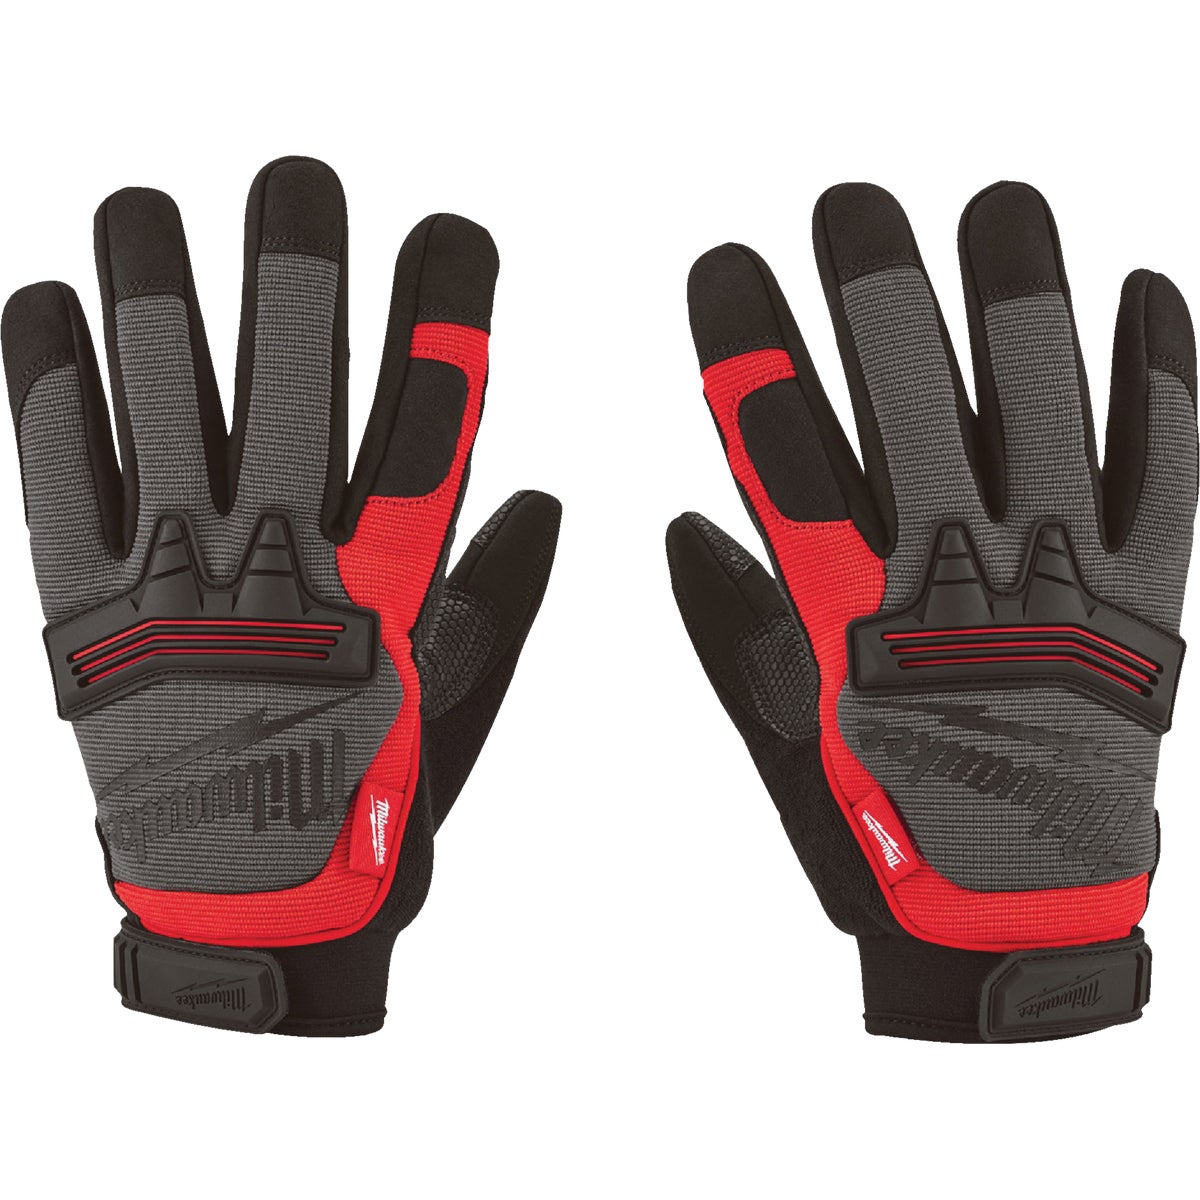 Item 705369, Wrecking work gloves designed to be long-lasting.